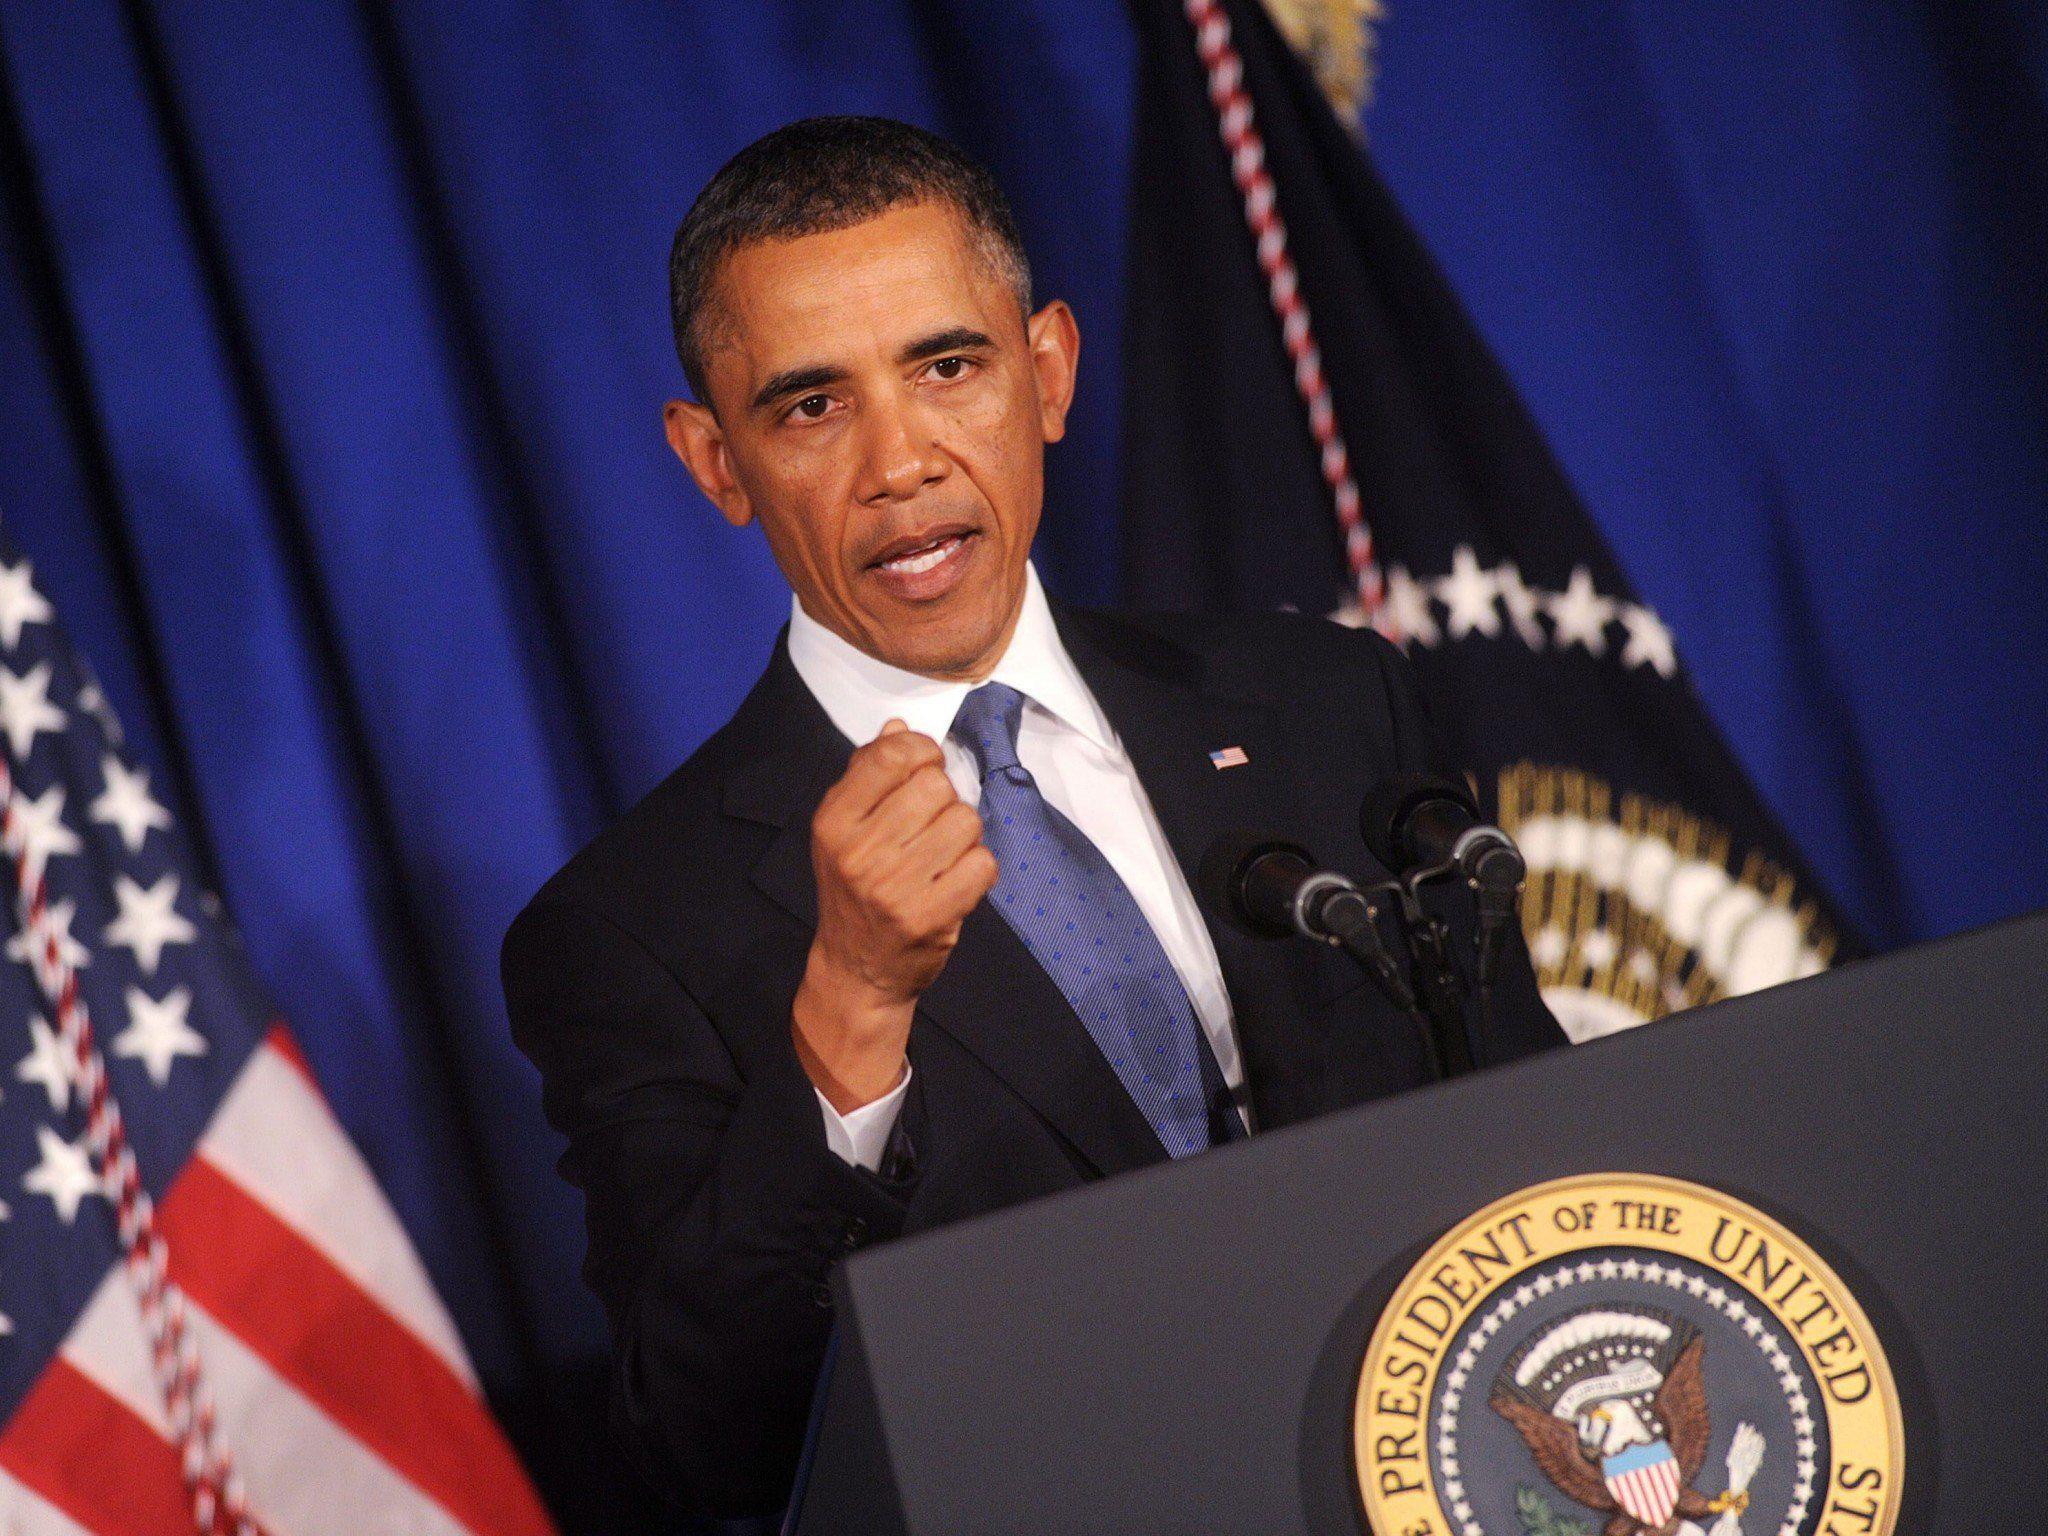 US-Präsident warnt vor "Kriegsrhetorik" bei Hackerangriffen.